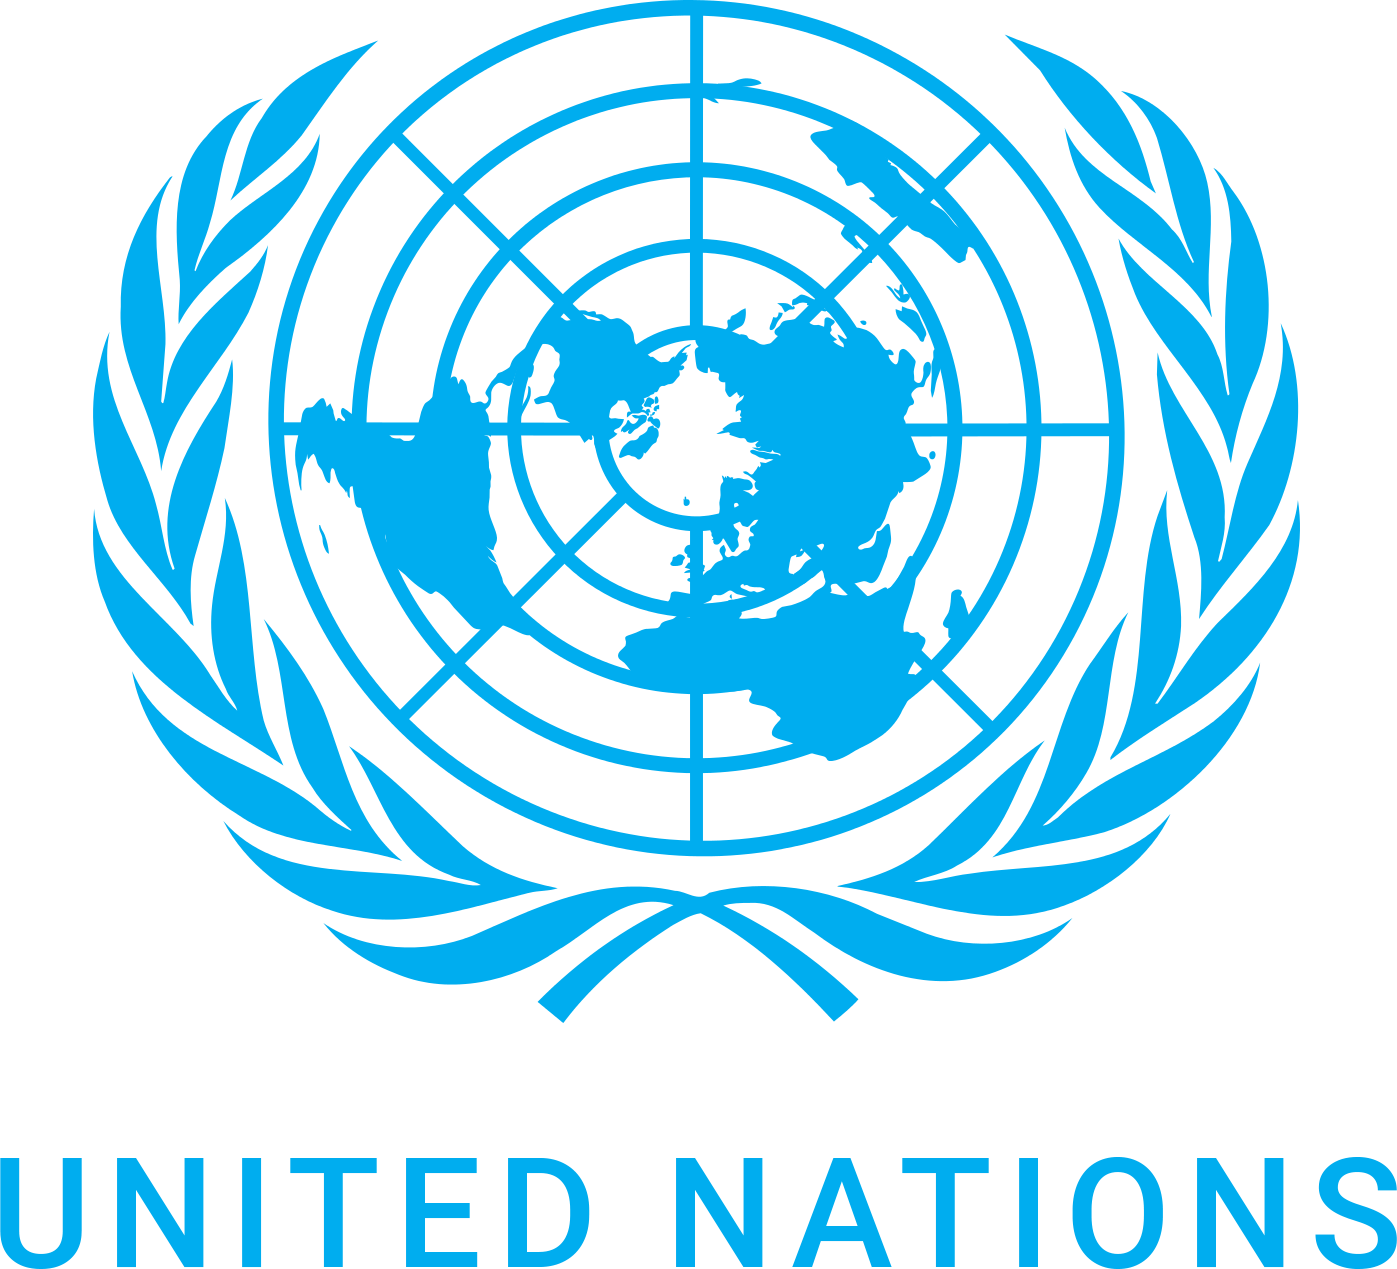 United Nations color logo